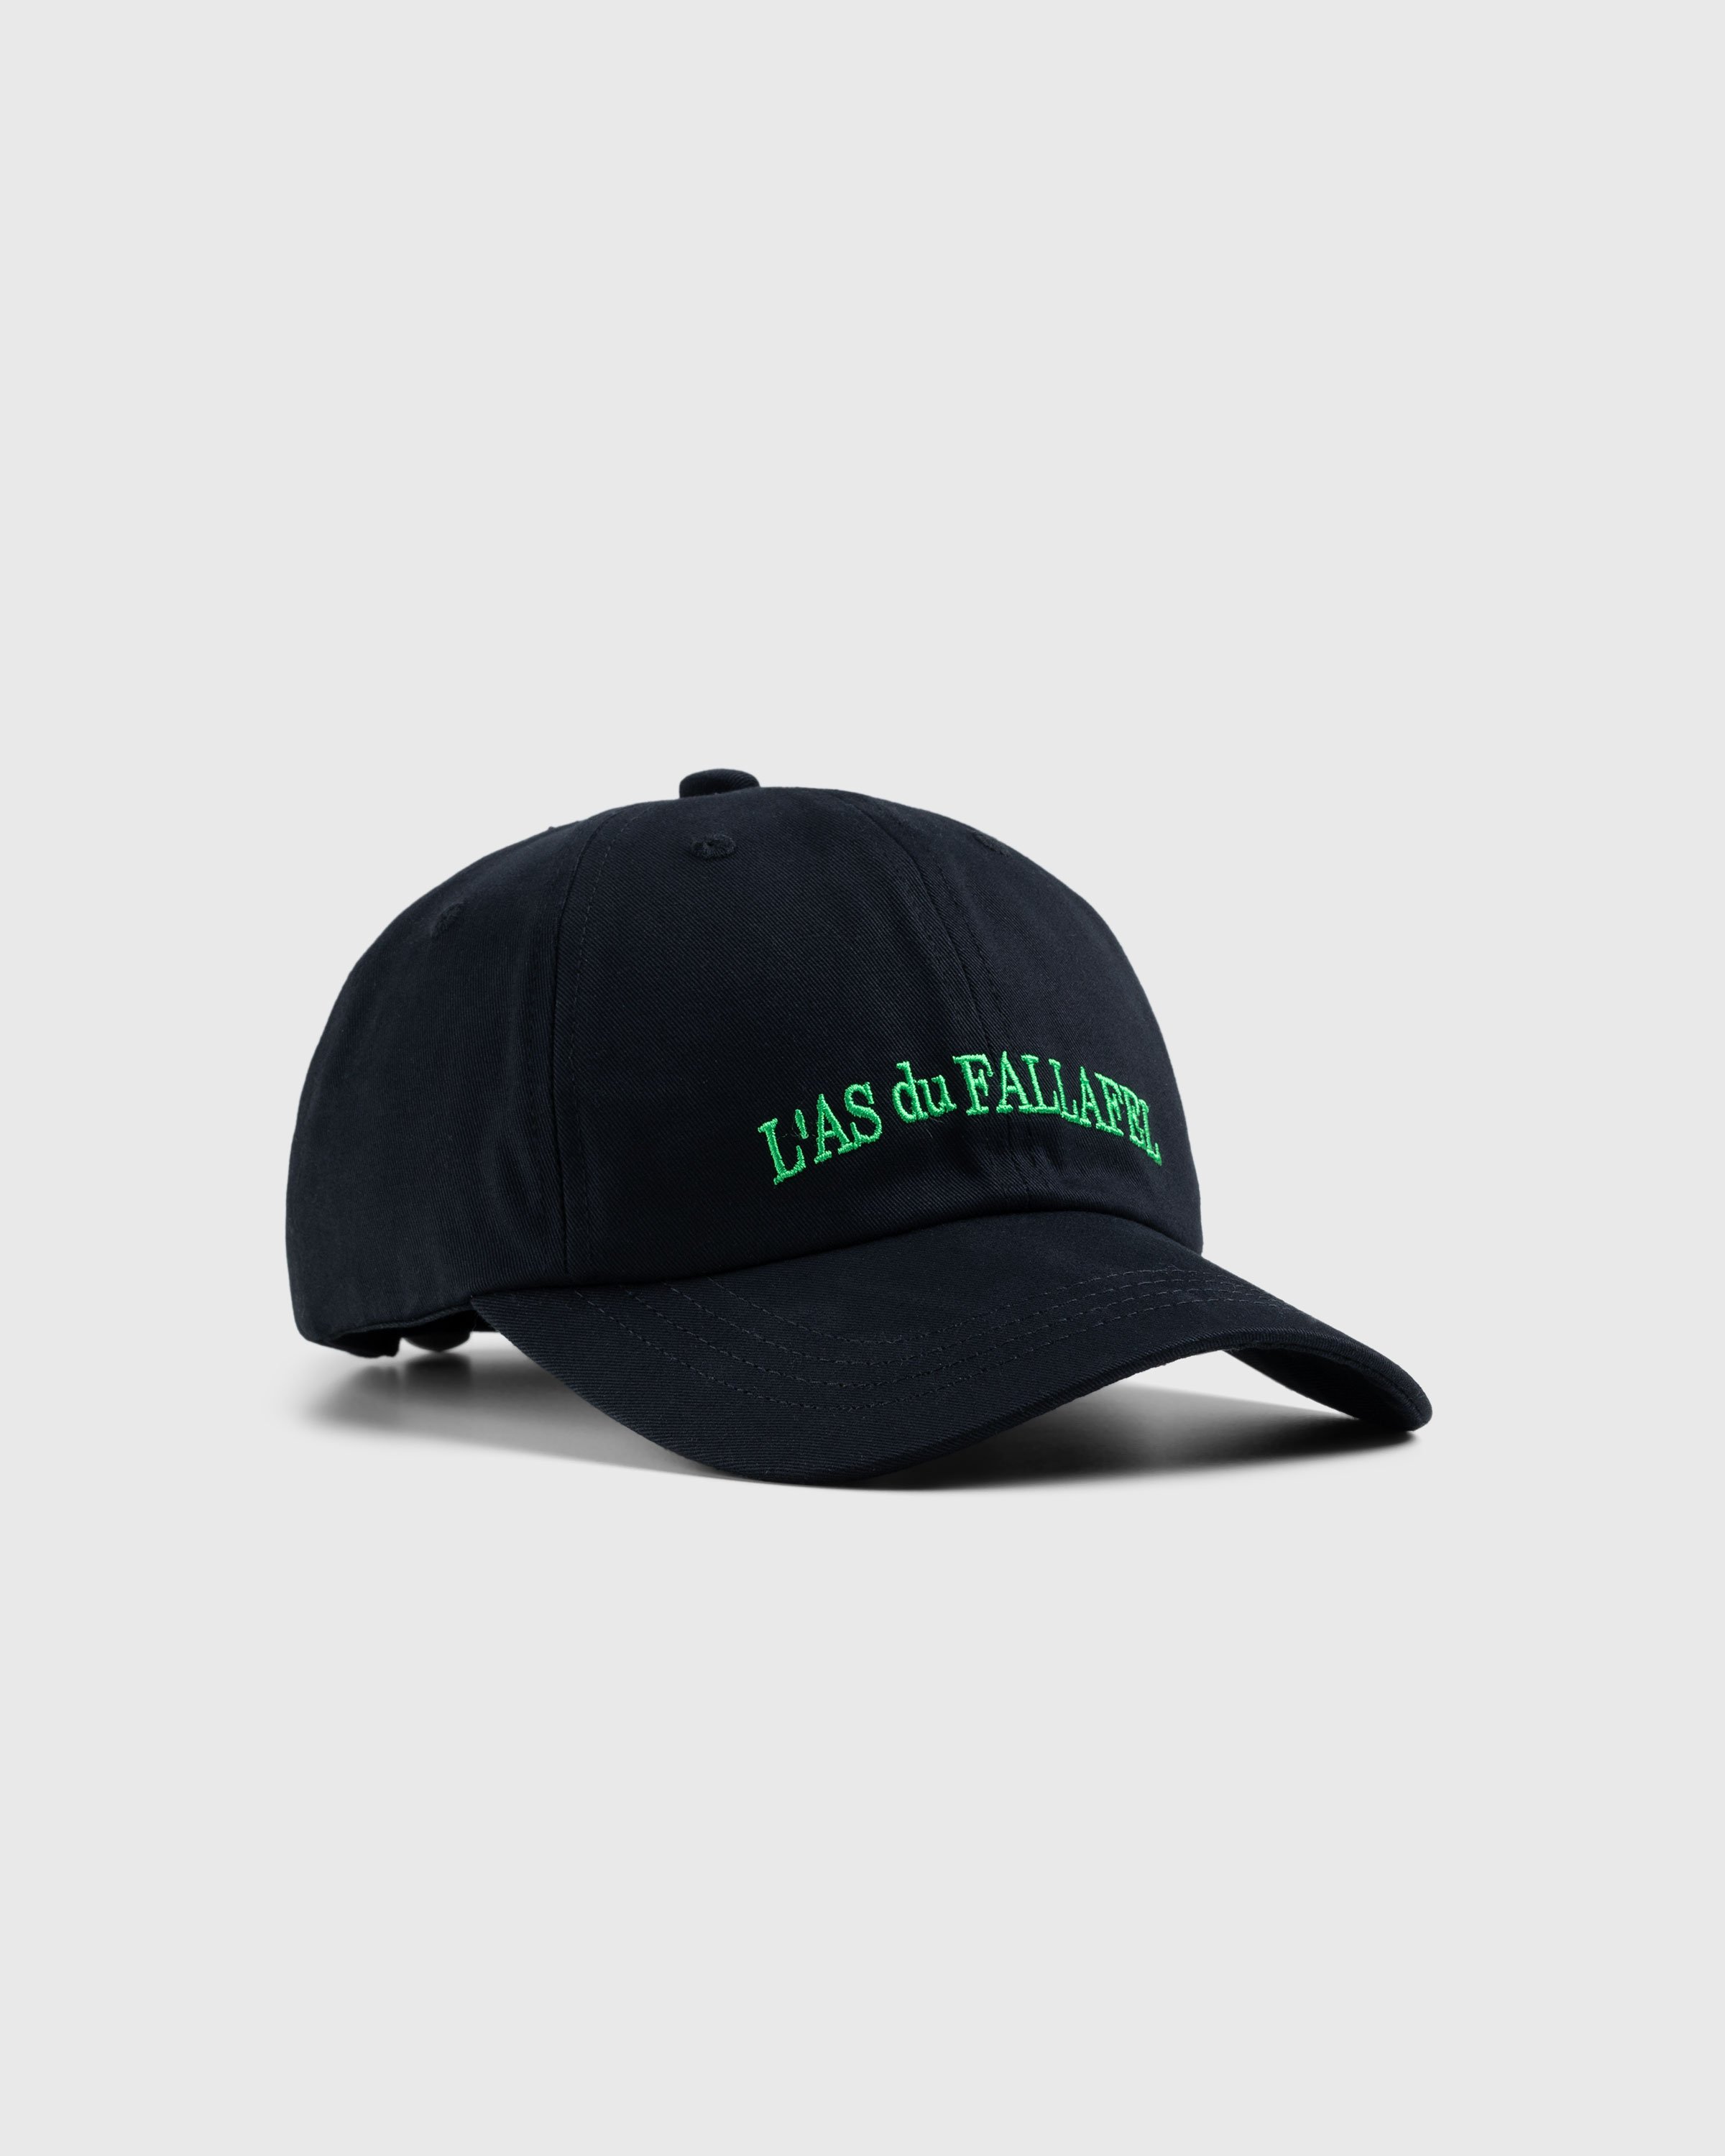 L'As du Fallafel x Highsnobiety - Ball Cap - Accessories - Black - Image 1